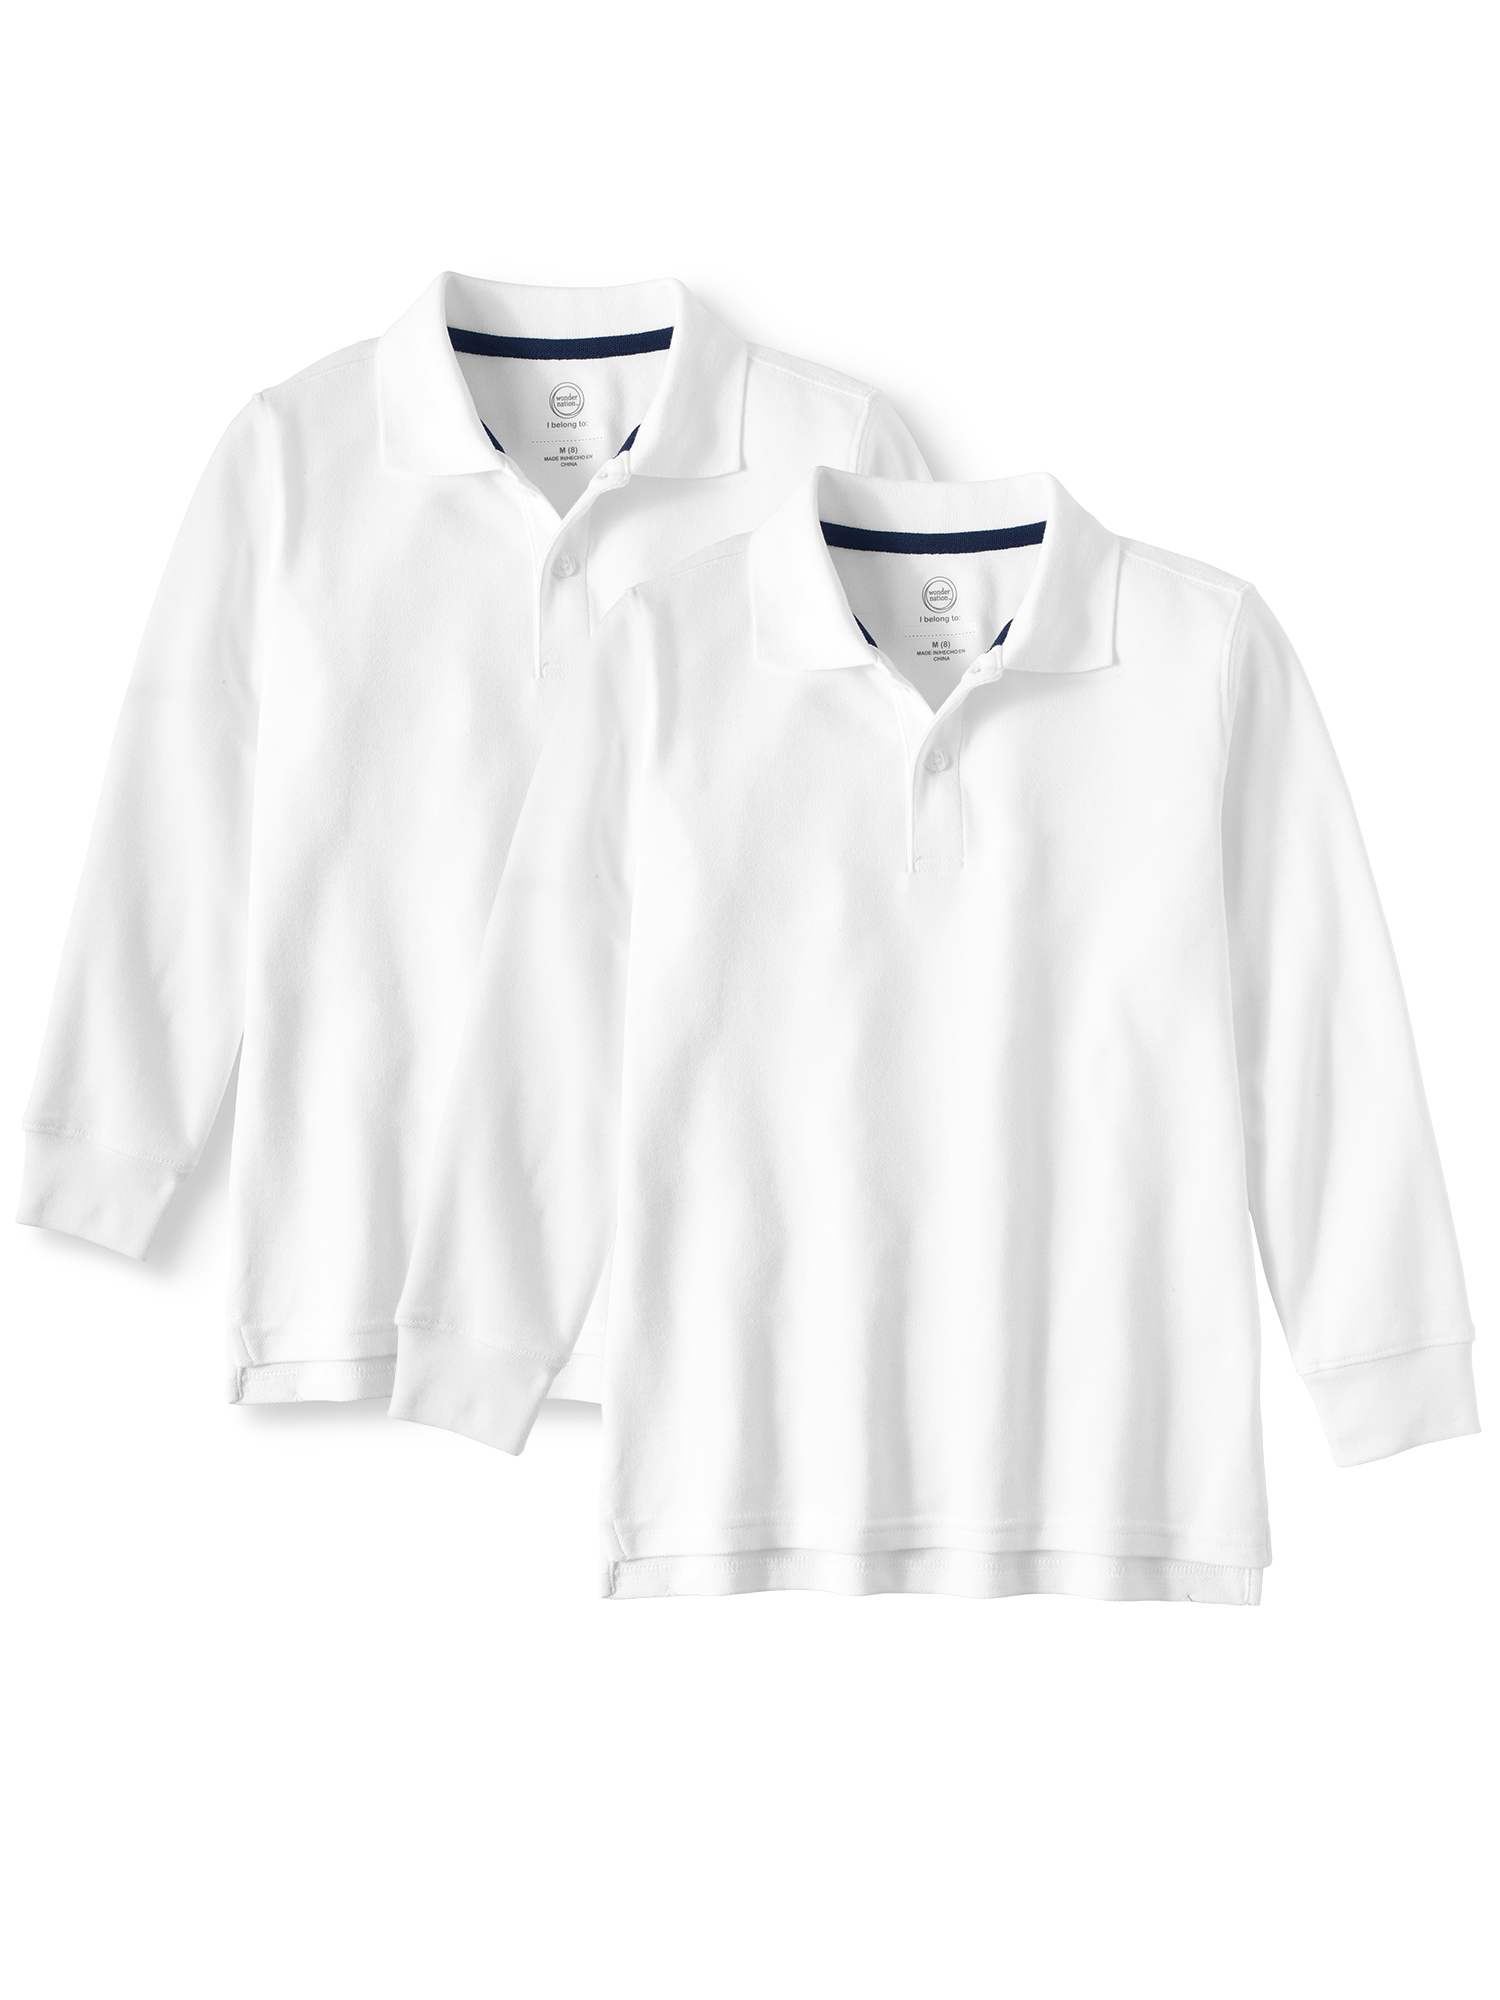 Wonder Nation Boys School Uniform Long Sleeve Double Pique Polo Shirt, 2 Pack Value Bundle, Sizes 4-18 & Husky - image 1 of 1